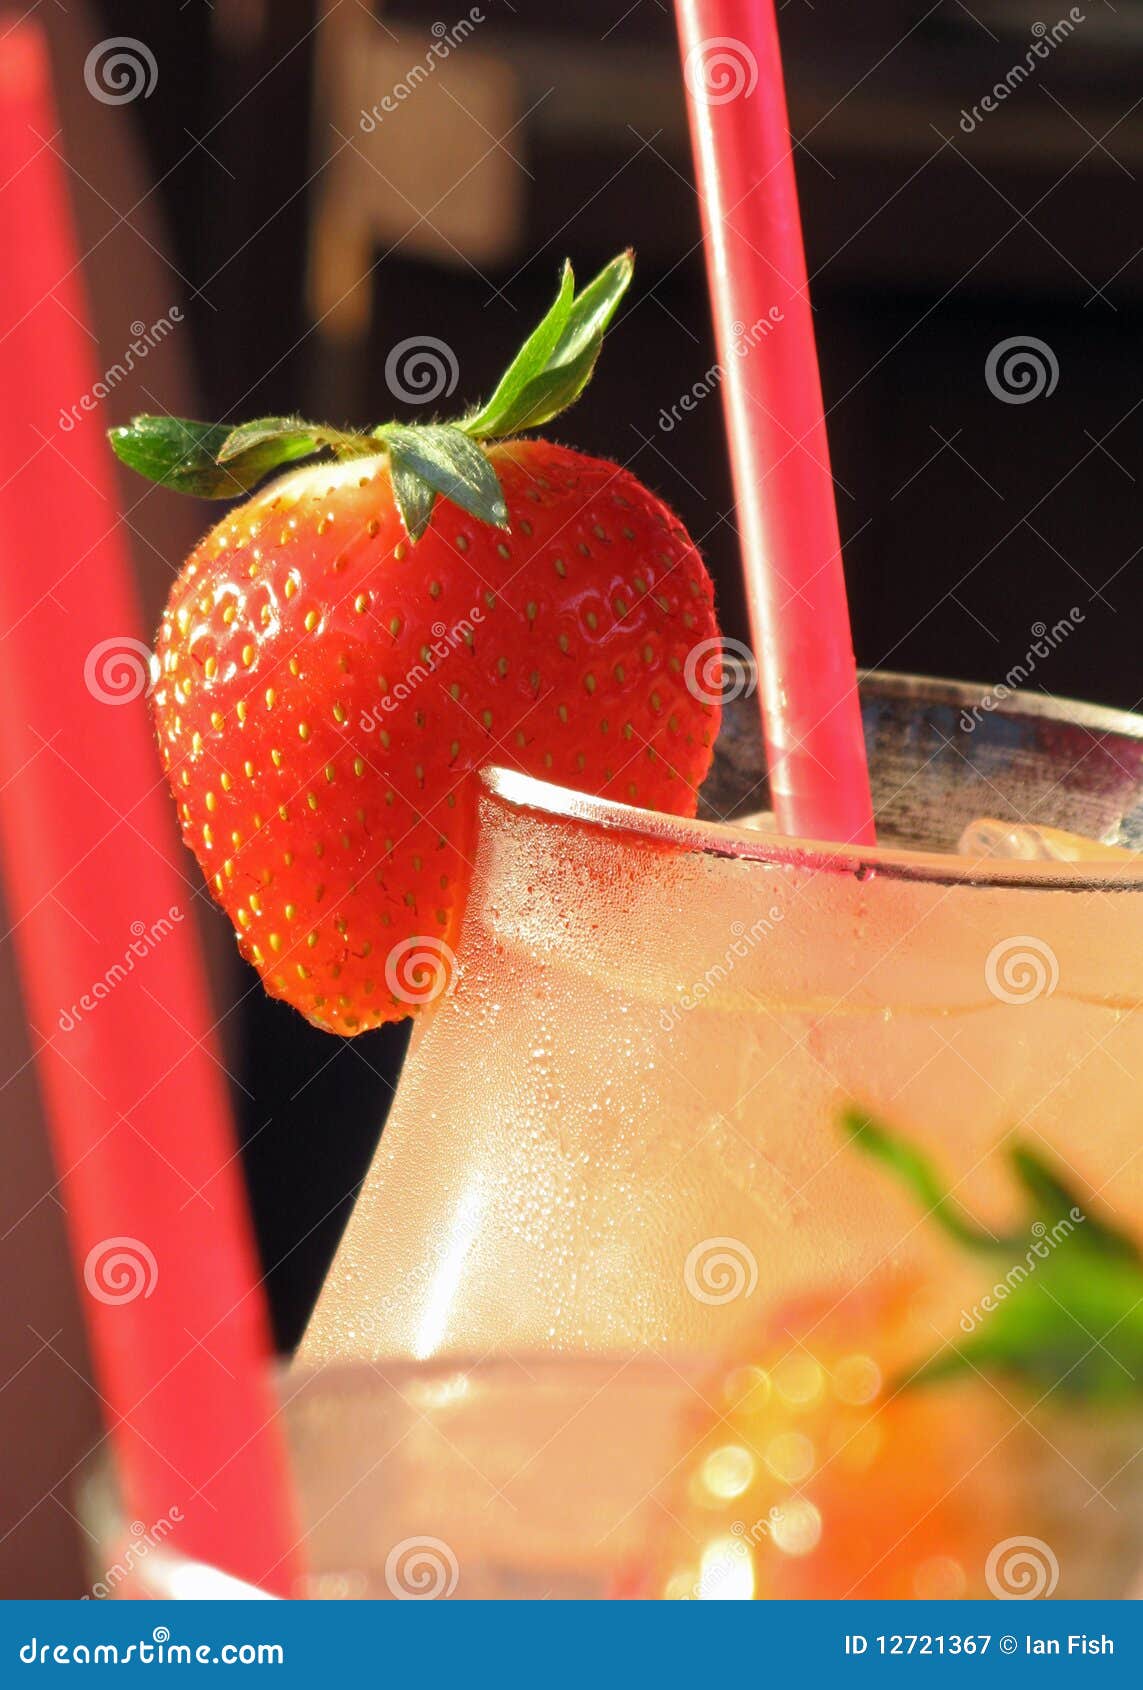 Santa Barbara coctail stock image. Image of cocktail - 12721367